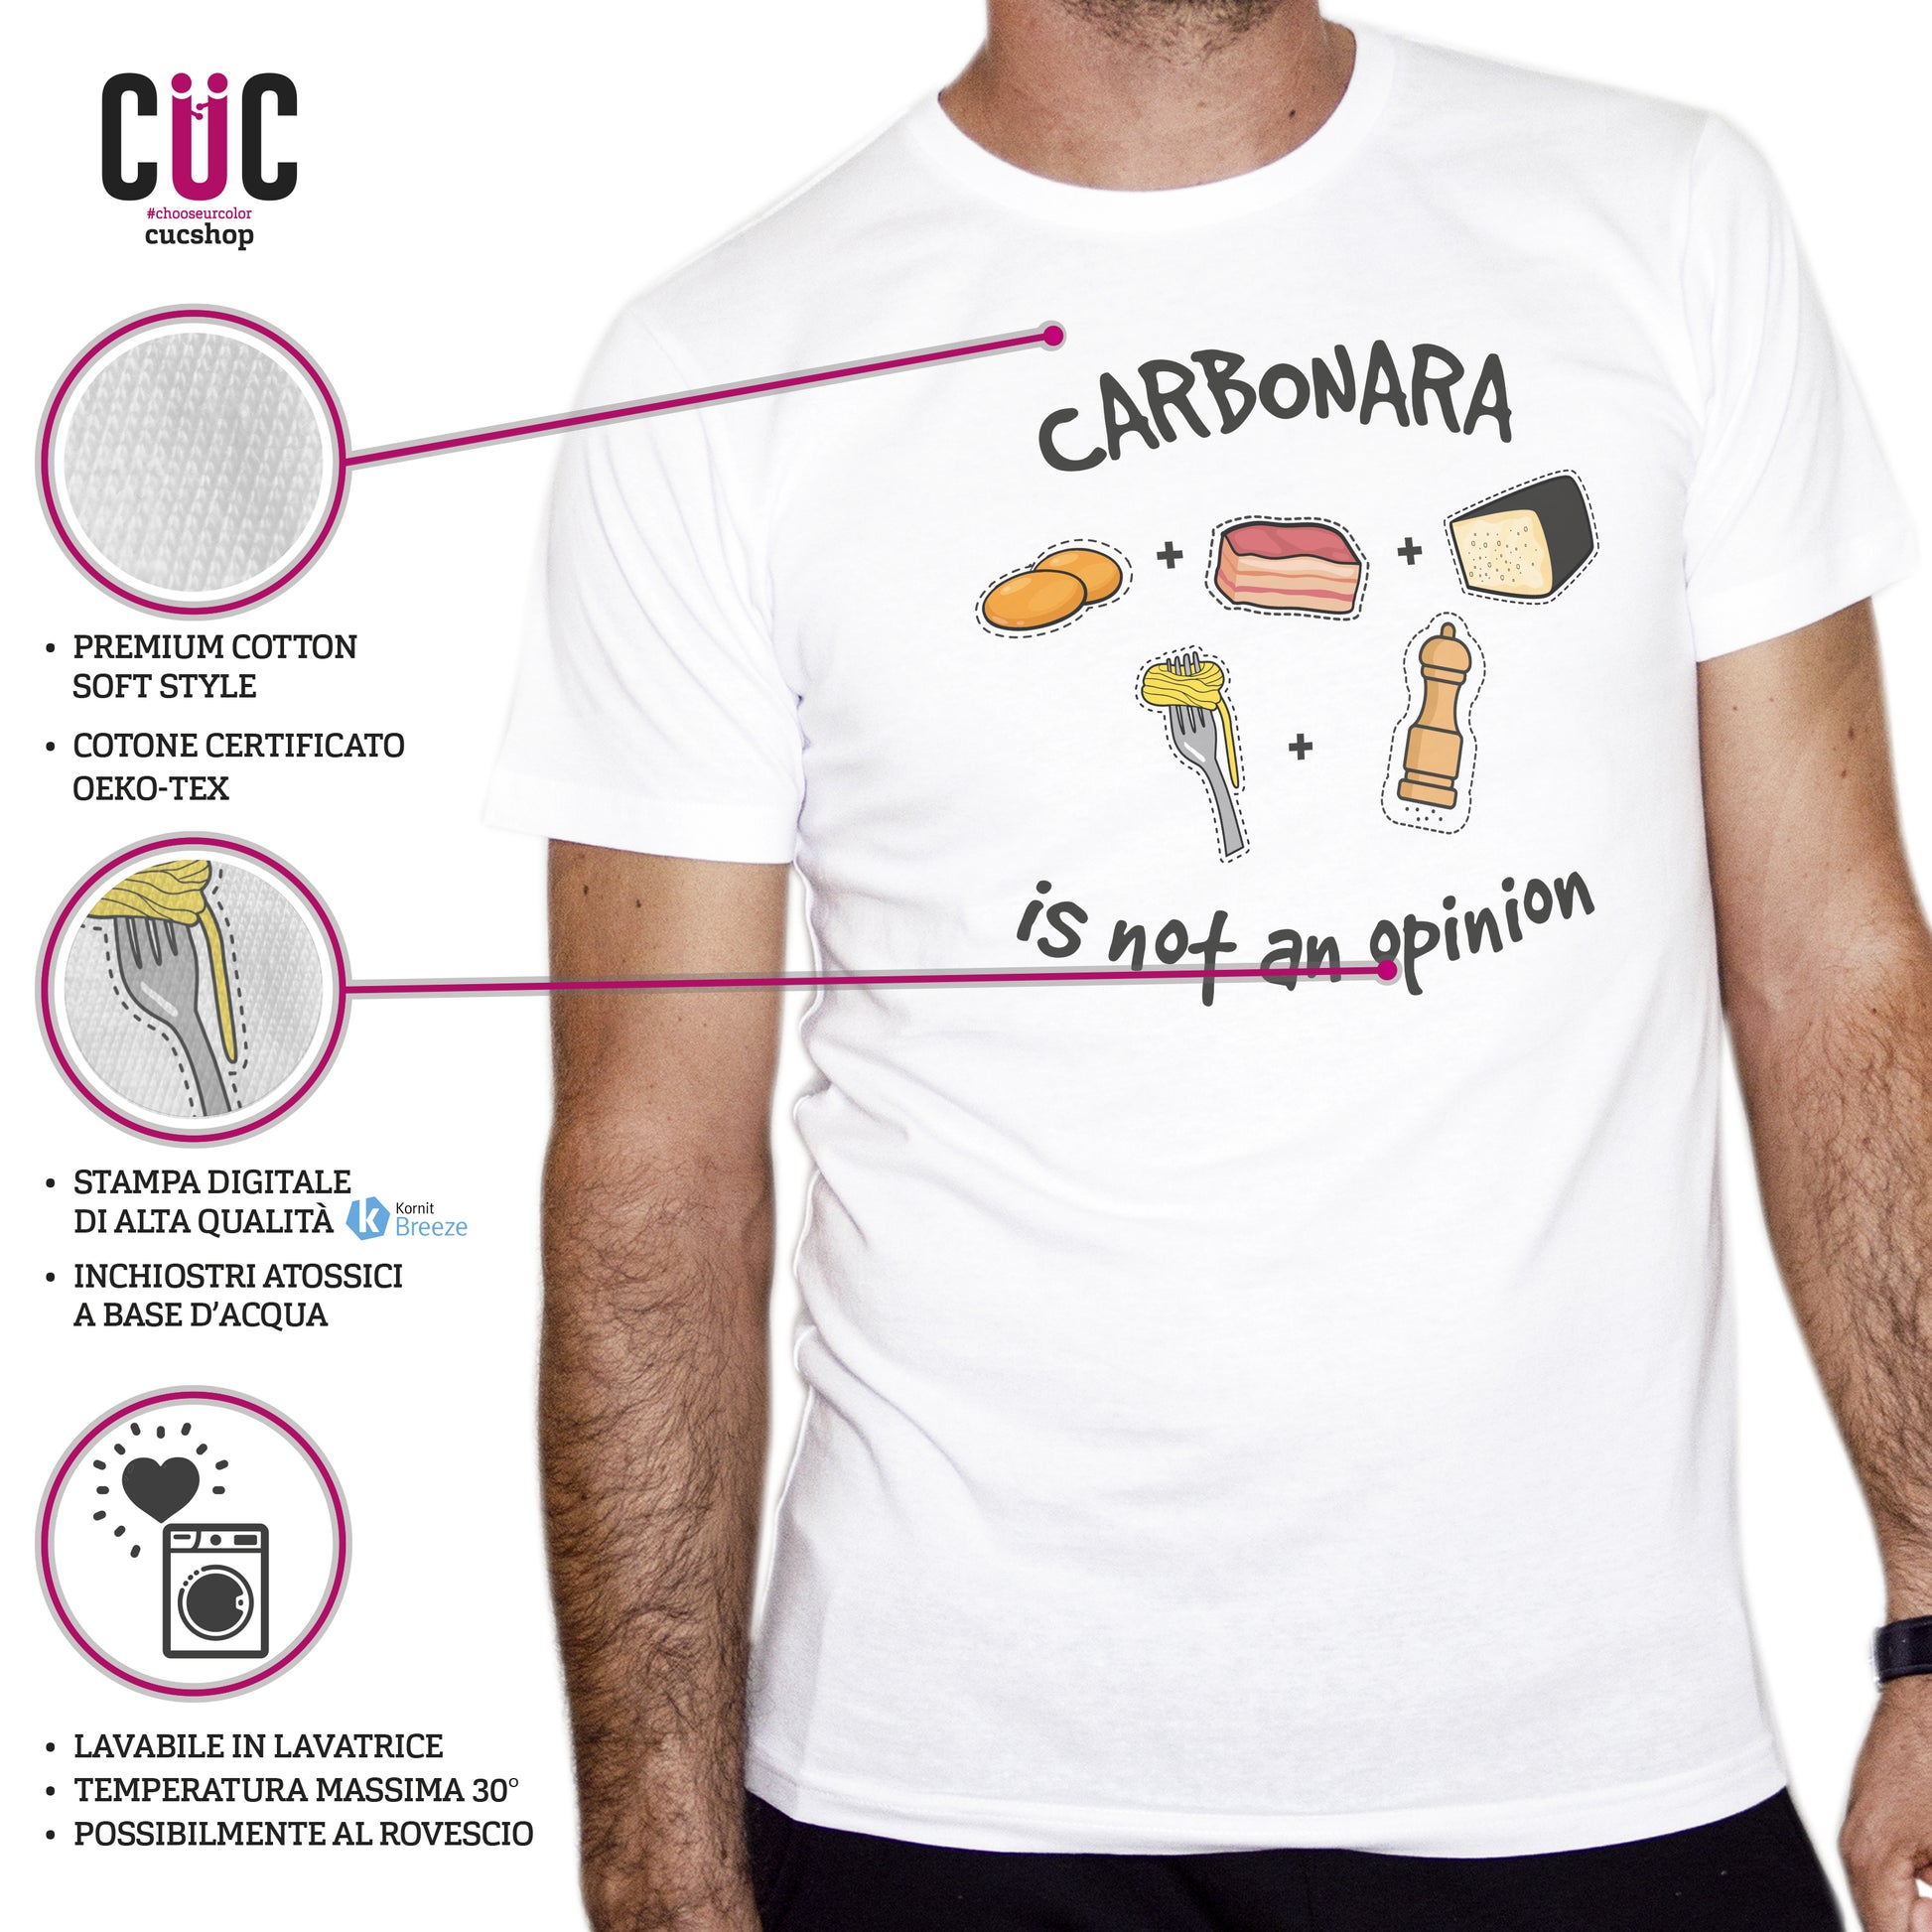 T-Shirt Carbonara - Ingrediente per fare una perfetta pasta - MUSIC Choose ur color - CUC chooseurcolor